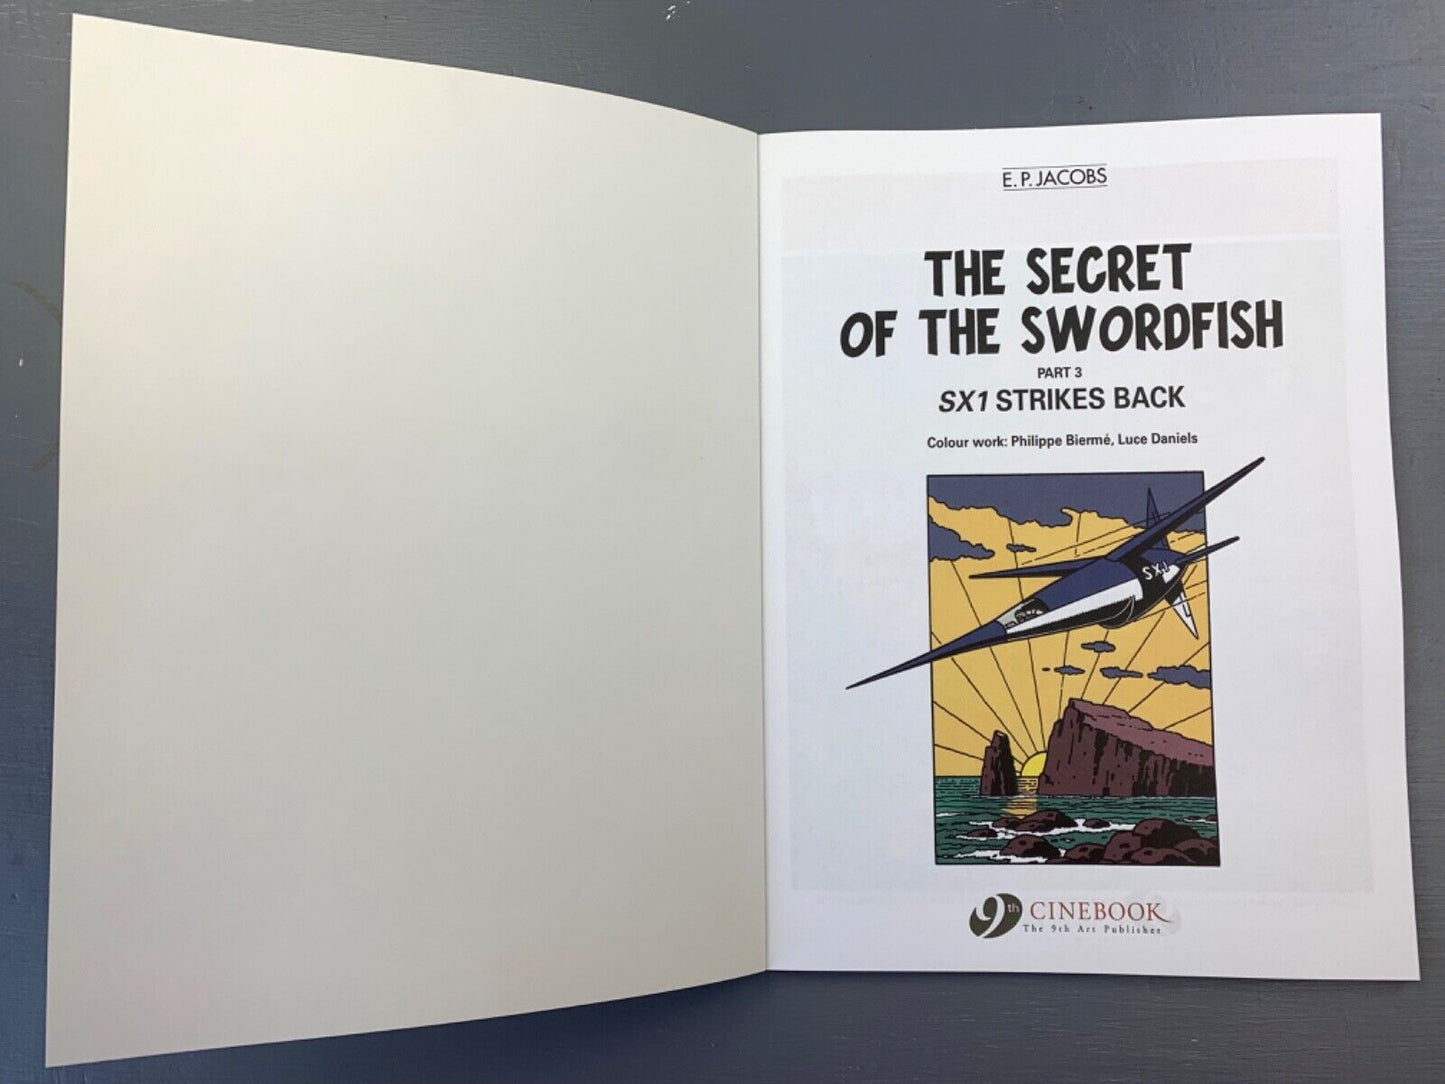 Secret of the Swordfish Part 3 - Blake & Mortimer Comic Volume 17 - Cinebook UK Paperback Edition